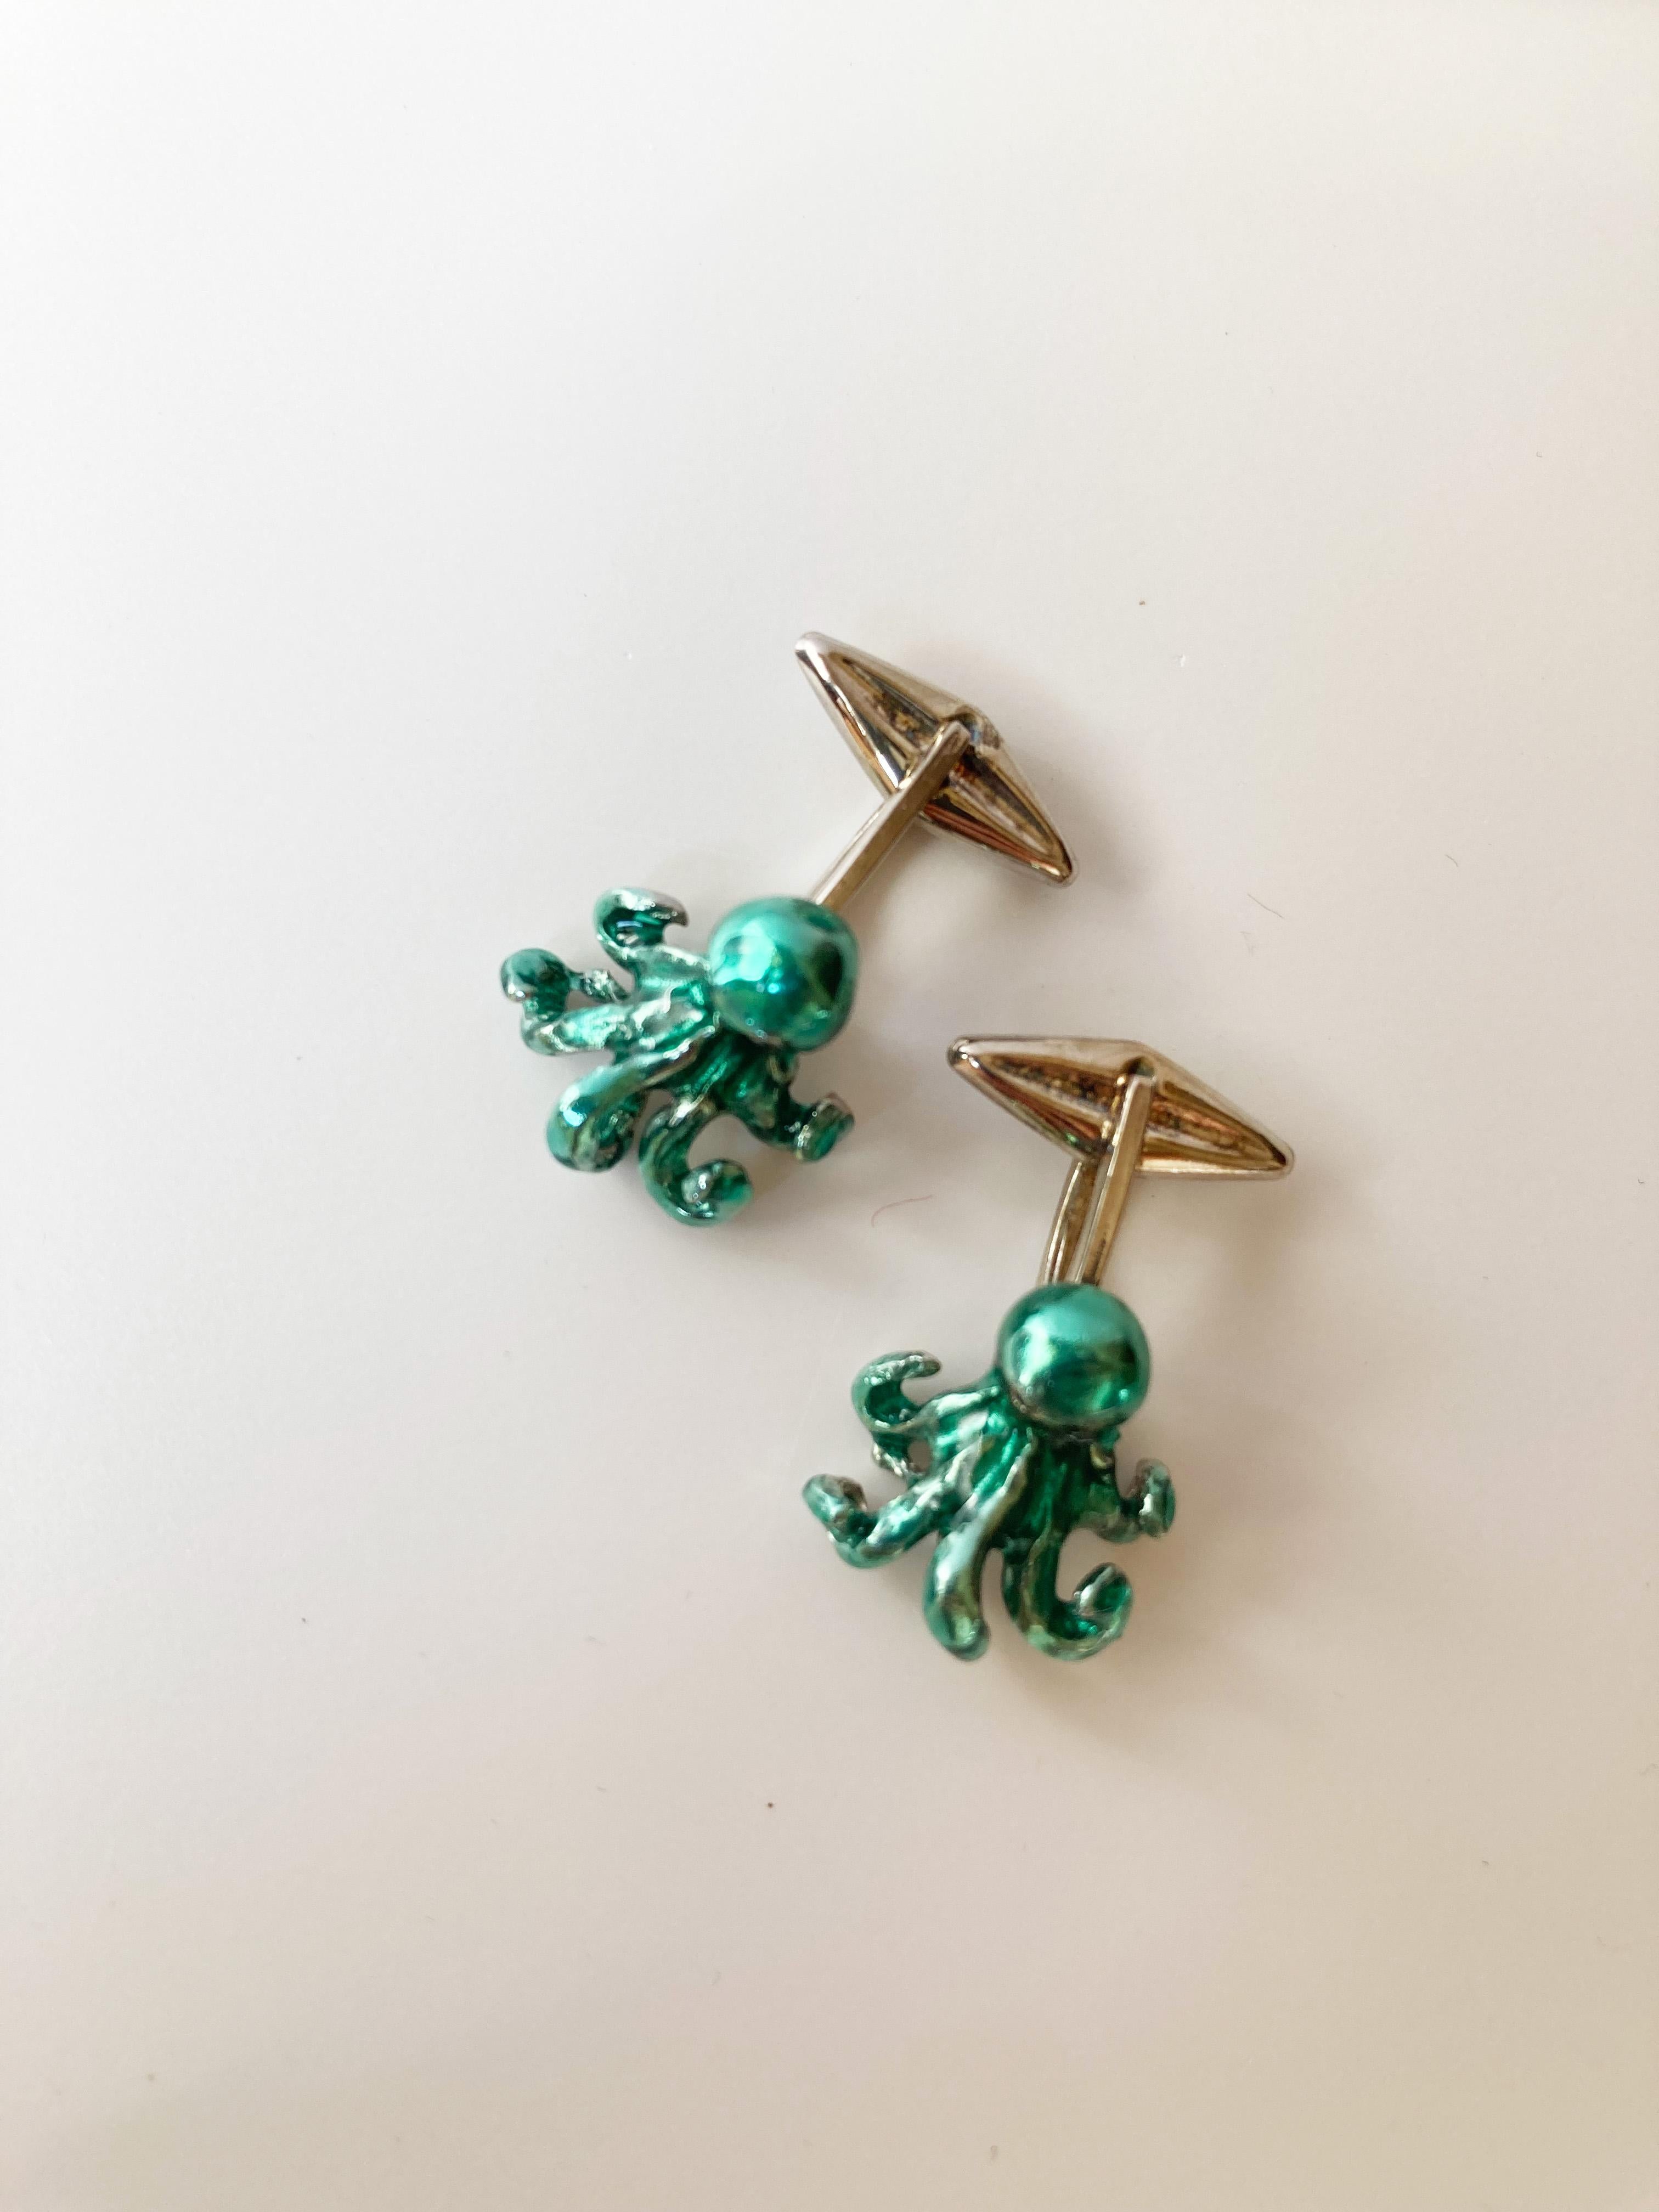 Brilliant Cut Rossella Ugolini Handcrafted Octopus Cufflinks Sterling Silver Enamel Sapphires For Sale